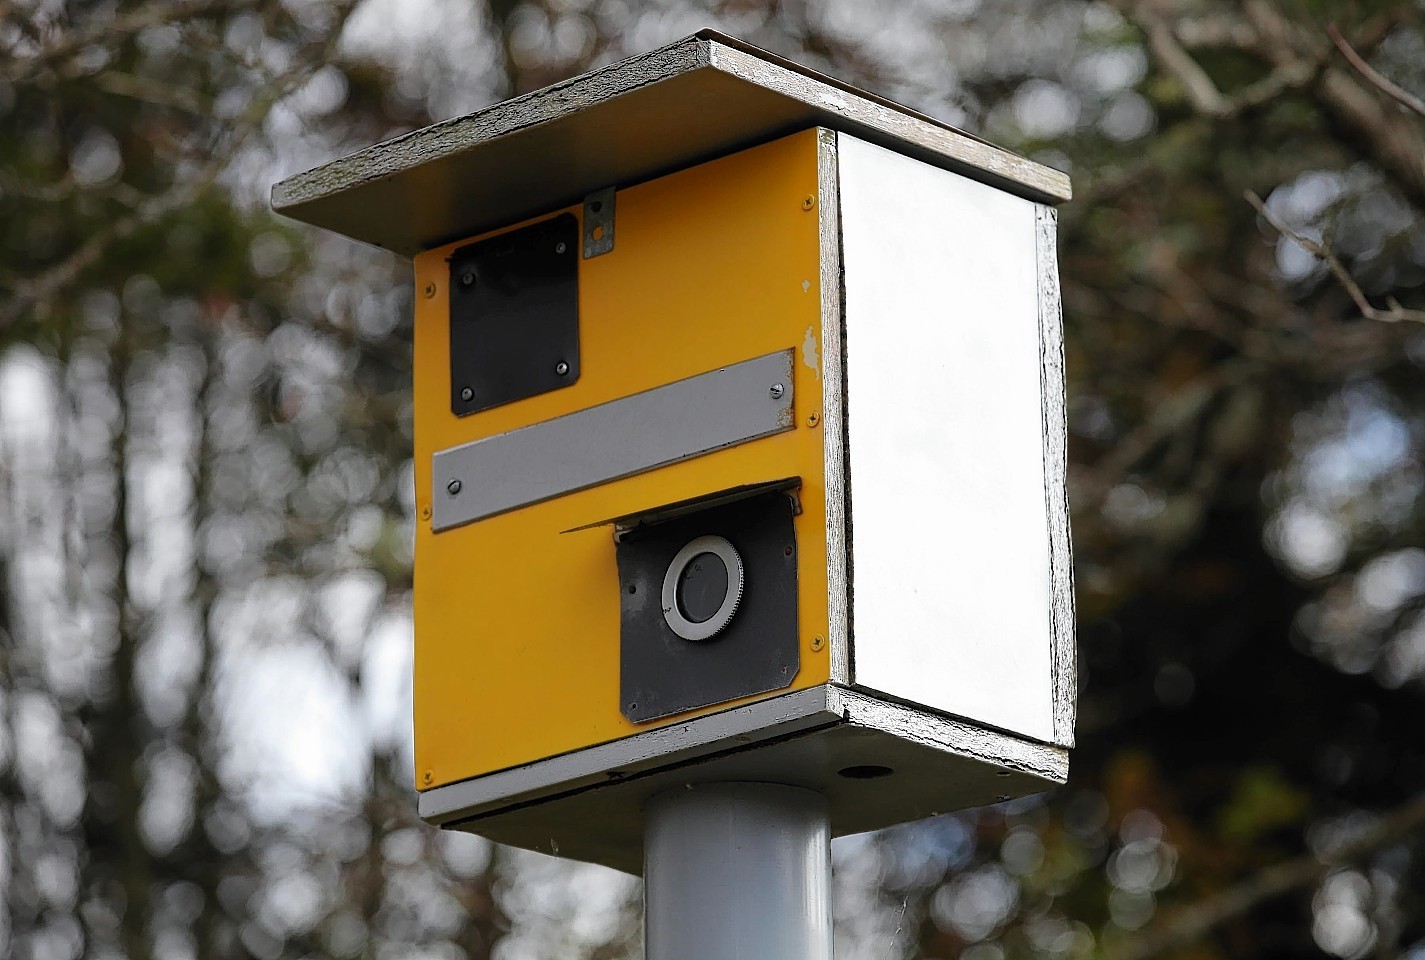 B&B owner's bird box looks like a speedcam